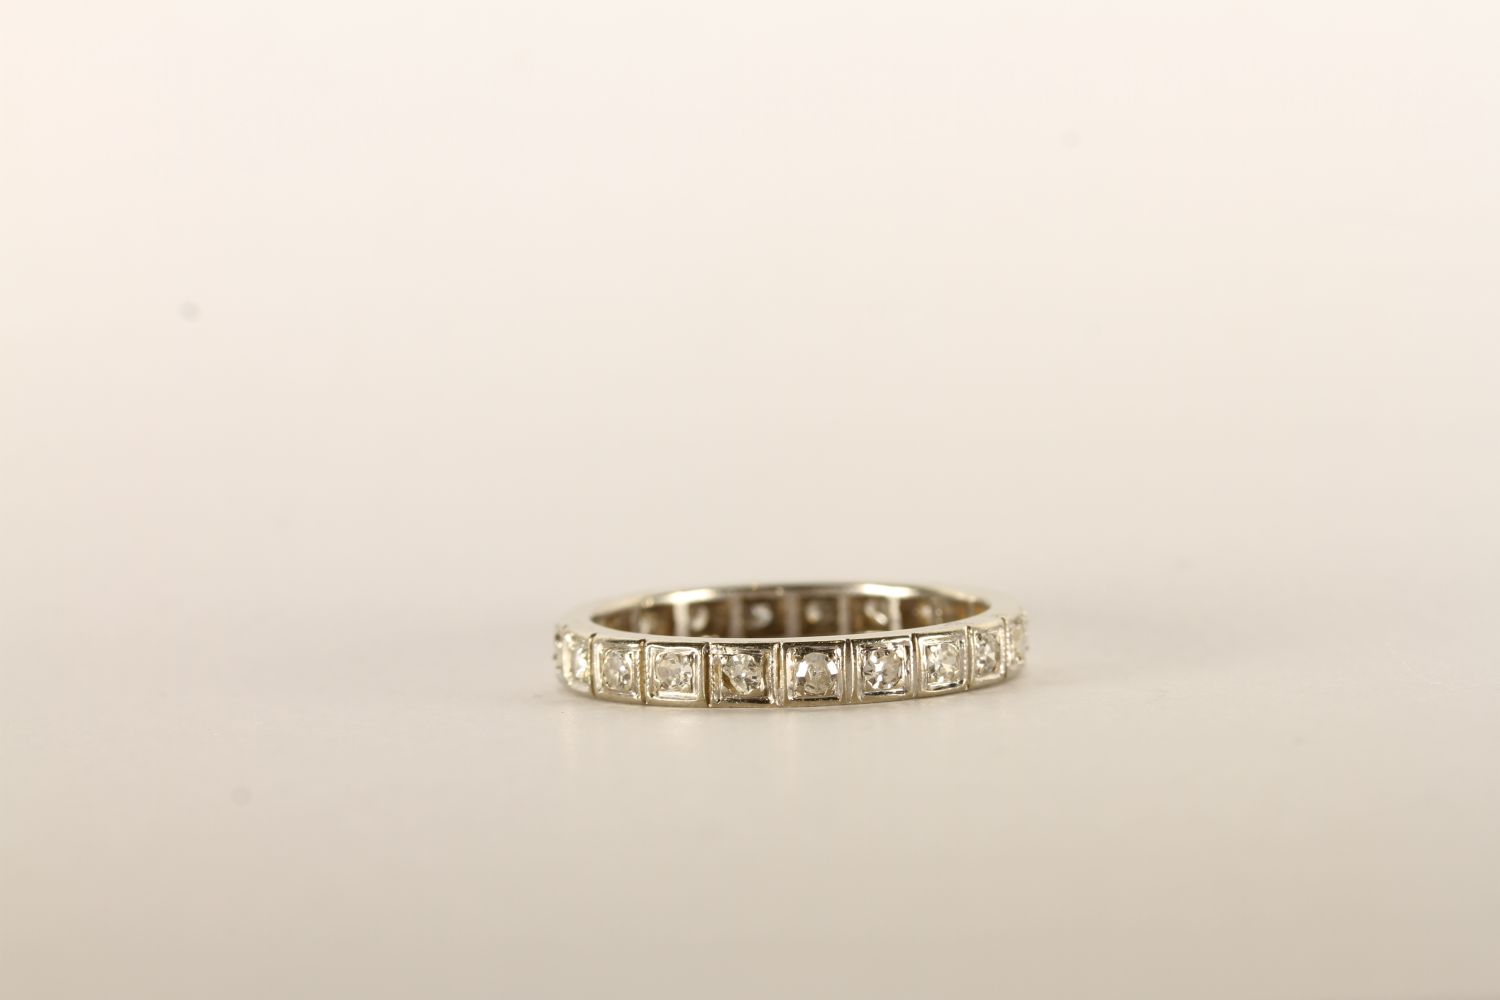 Diamond full eternity ring, estimated 0.22ct, in 18ct white gold